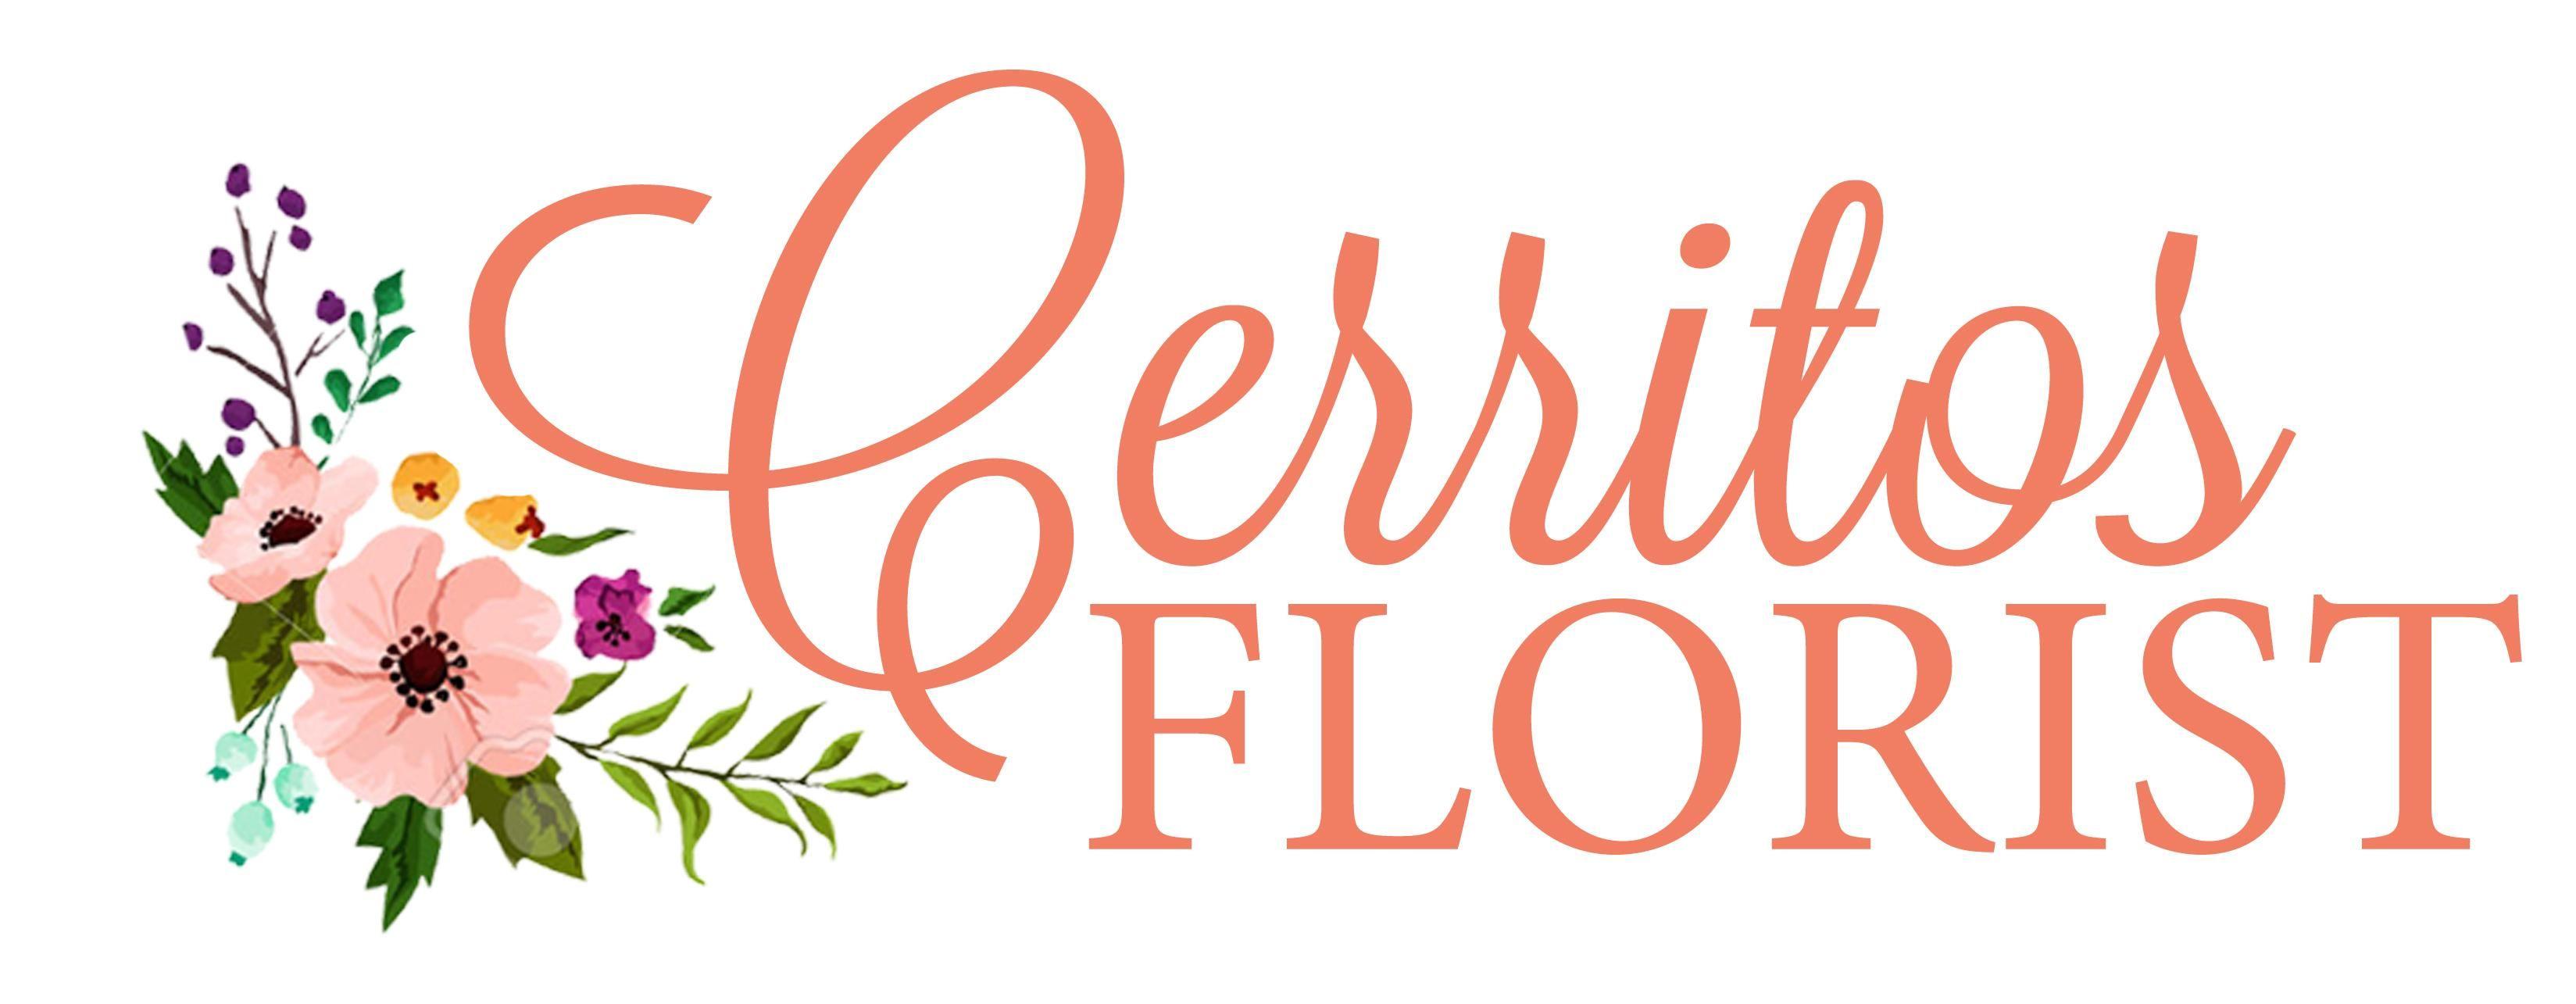 Flower Delivery Logo - Cerritos Florist | Flower Delivery by Cerritos Florist